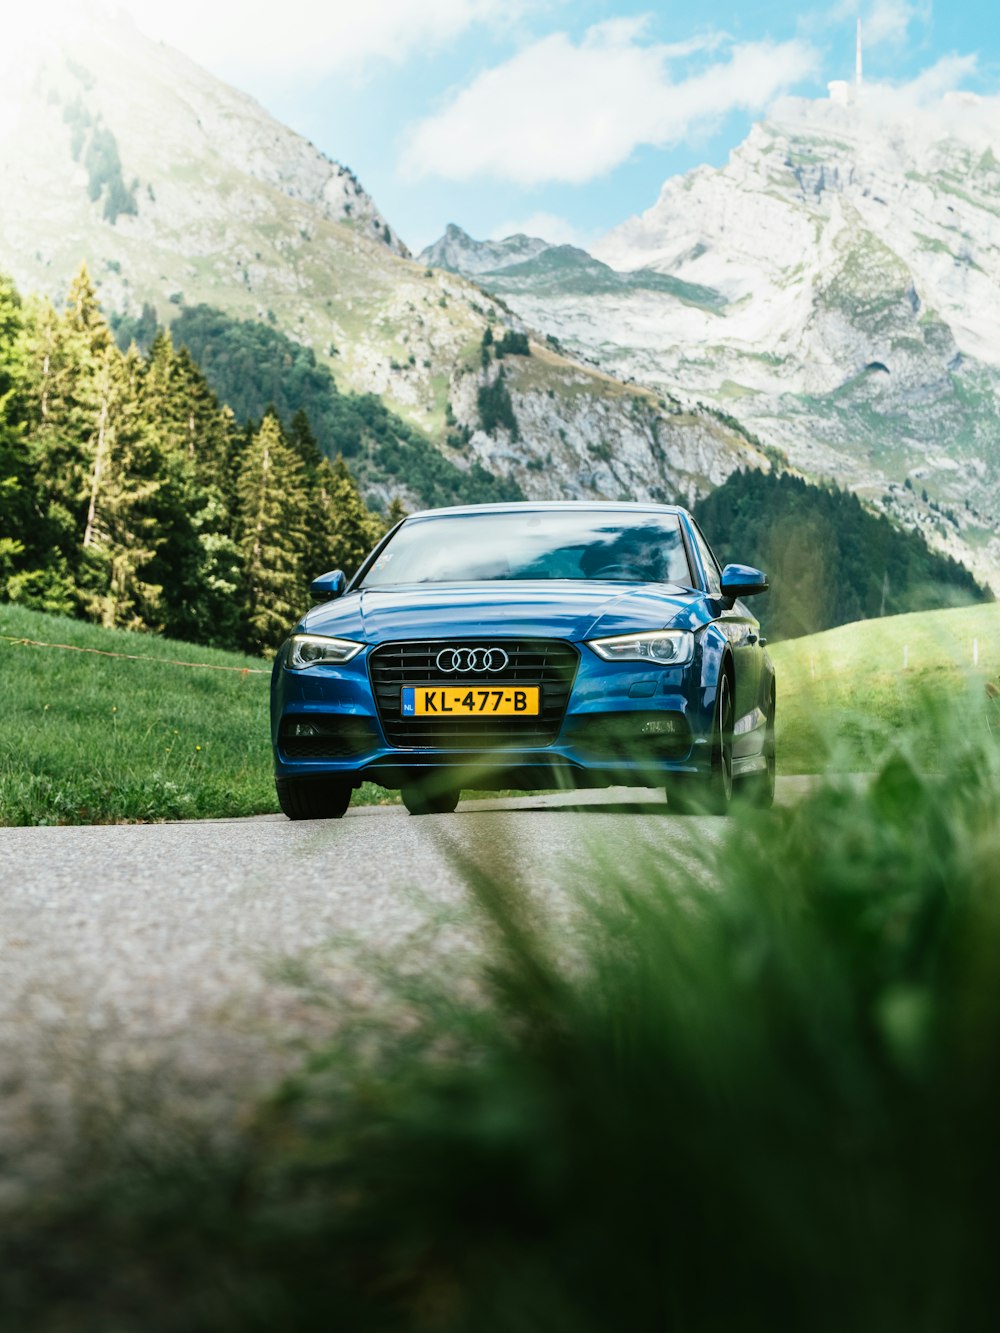 blue Audi vehicle traveling on road